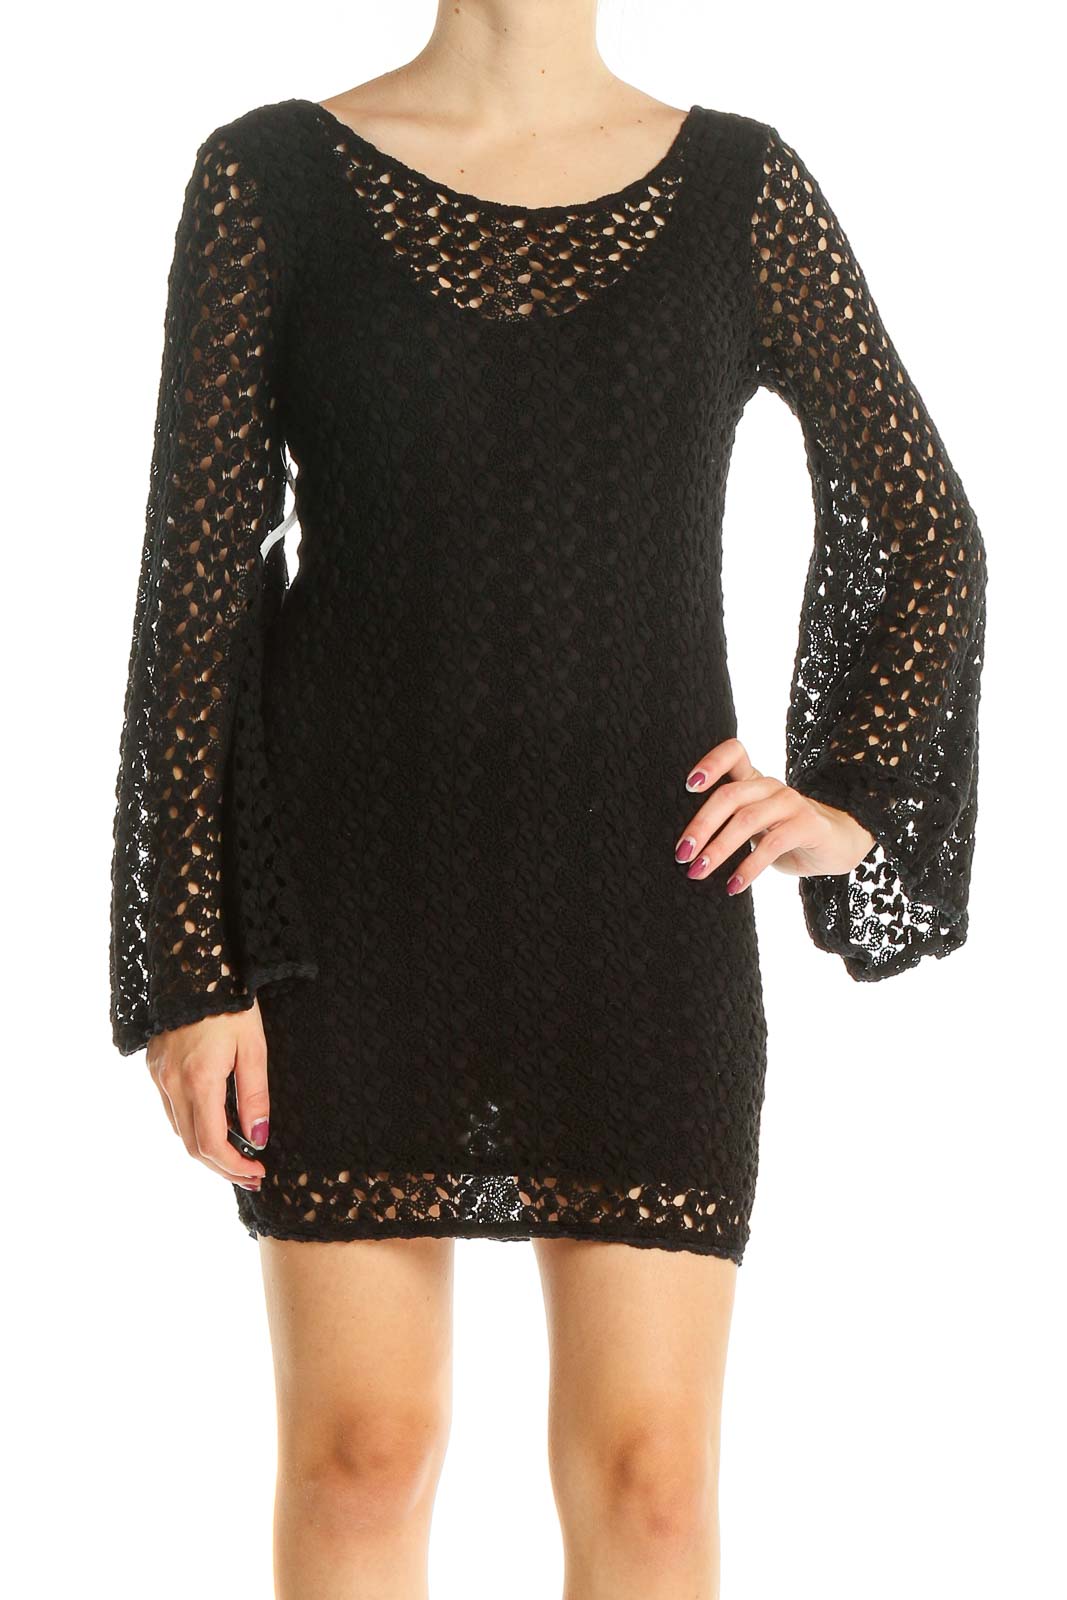 Black Crochet Sheath Dress Front